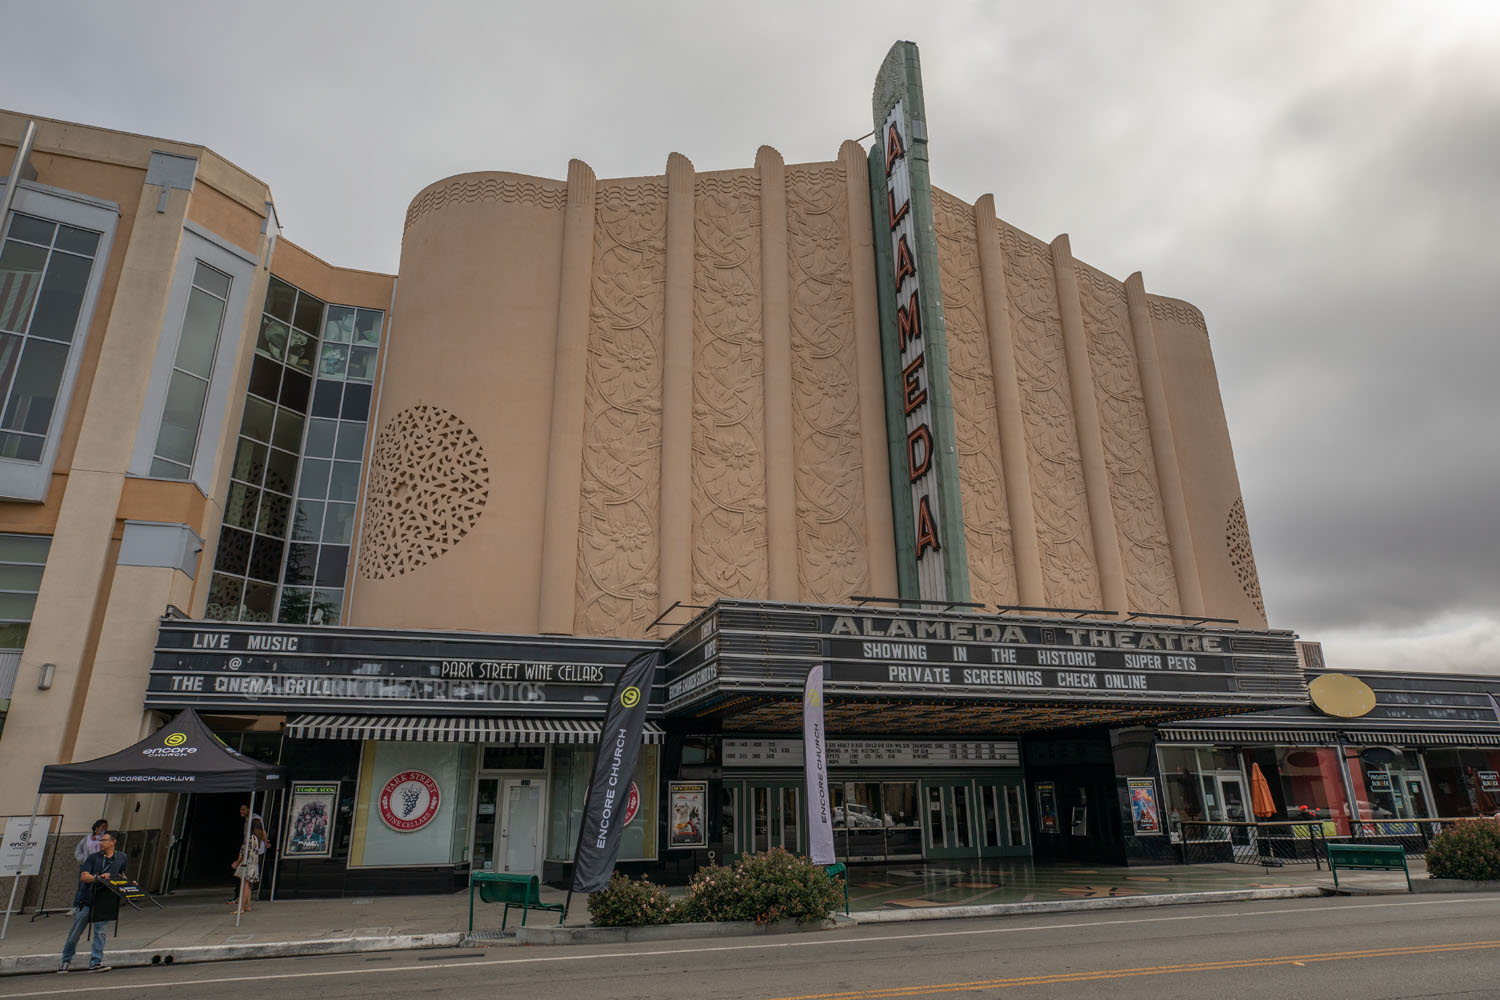 Home - Alameda Theatre & Cineplex